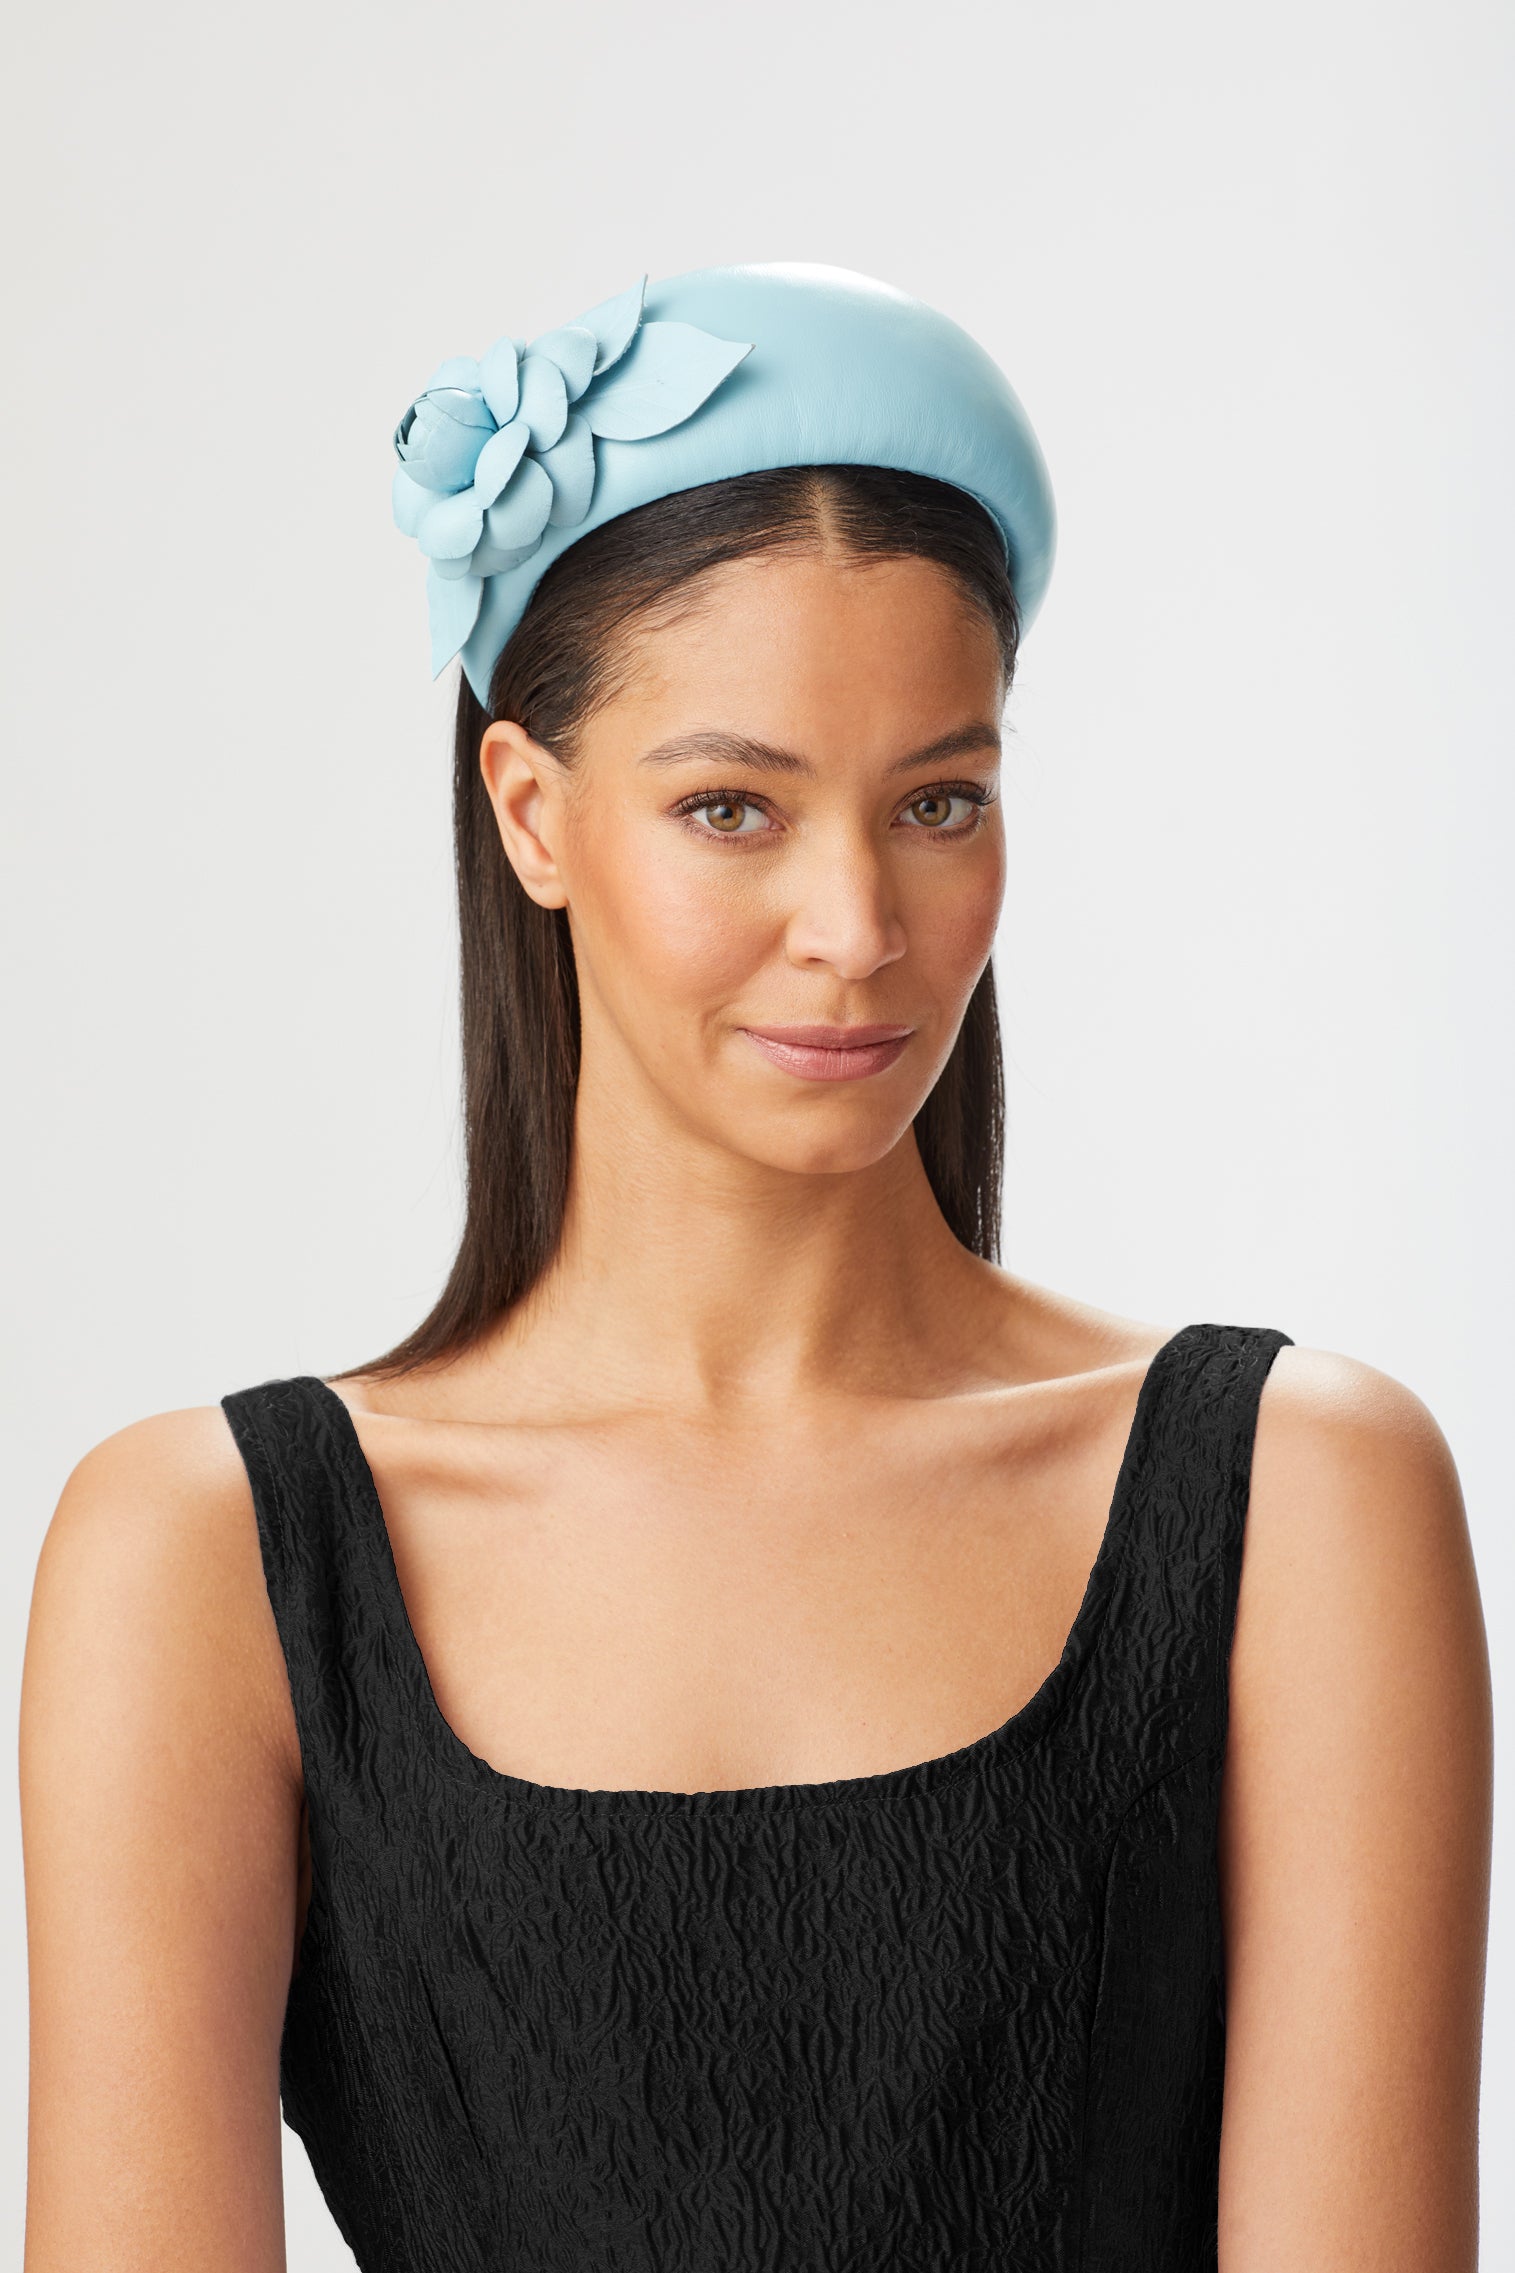 Agnes Headband - Black Hats & Headpieces for Women - Lock & Co. Hatters London UK